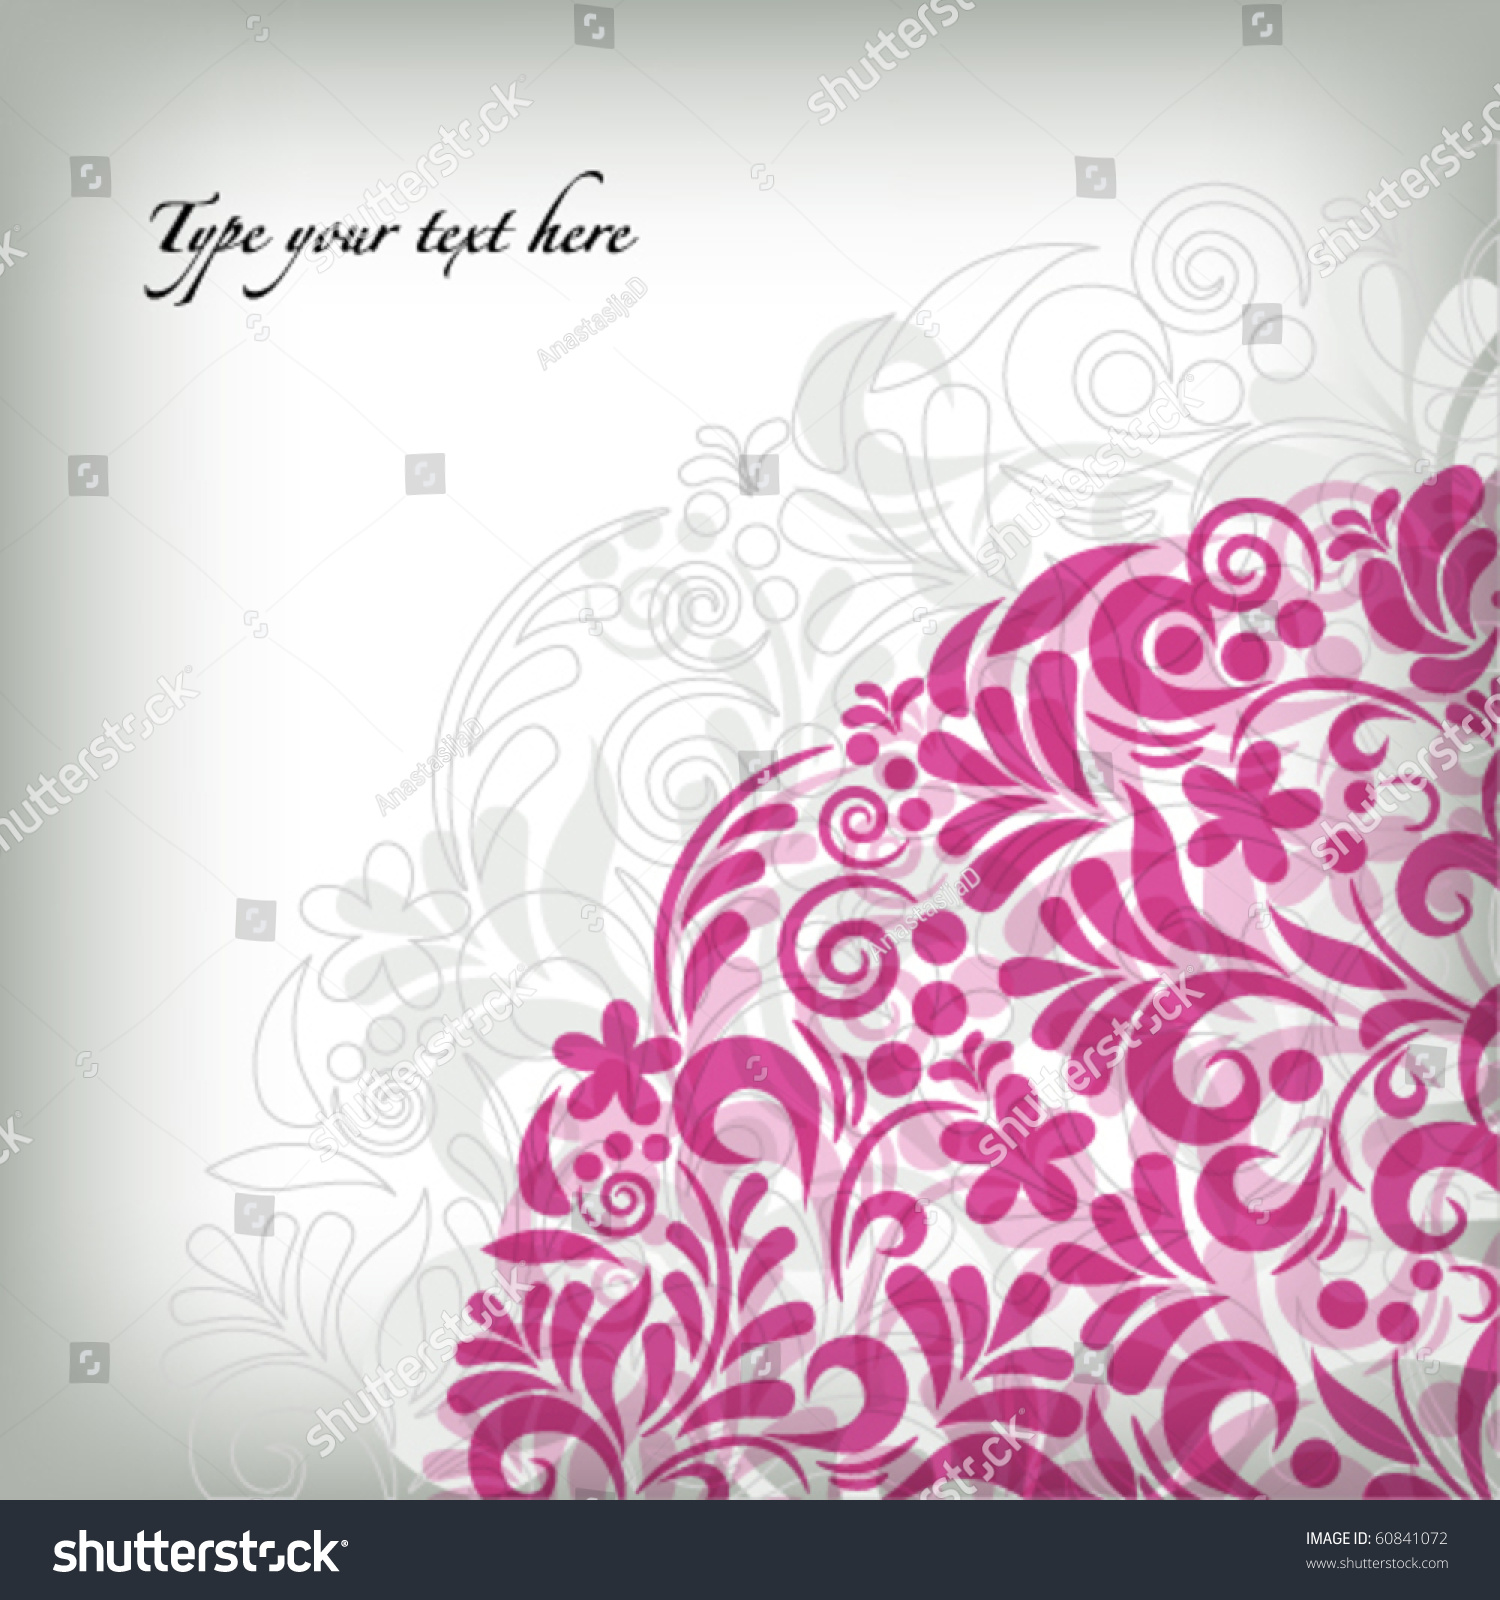 Soft Floral Background Stock Vector Illustration 60841072 : Shutterstock